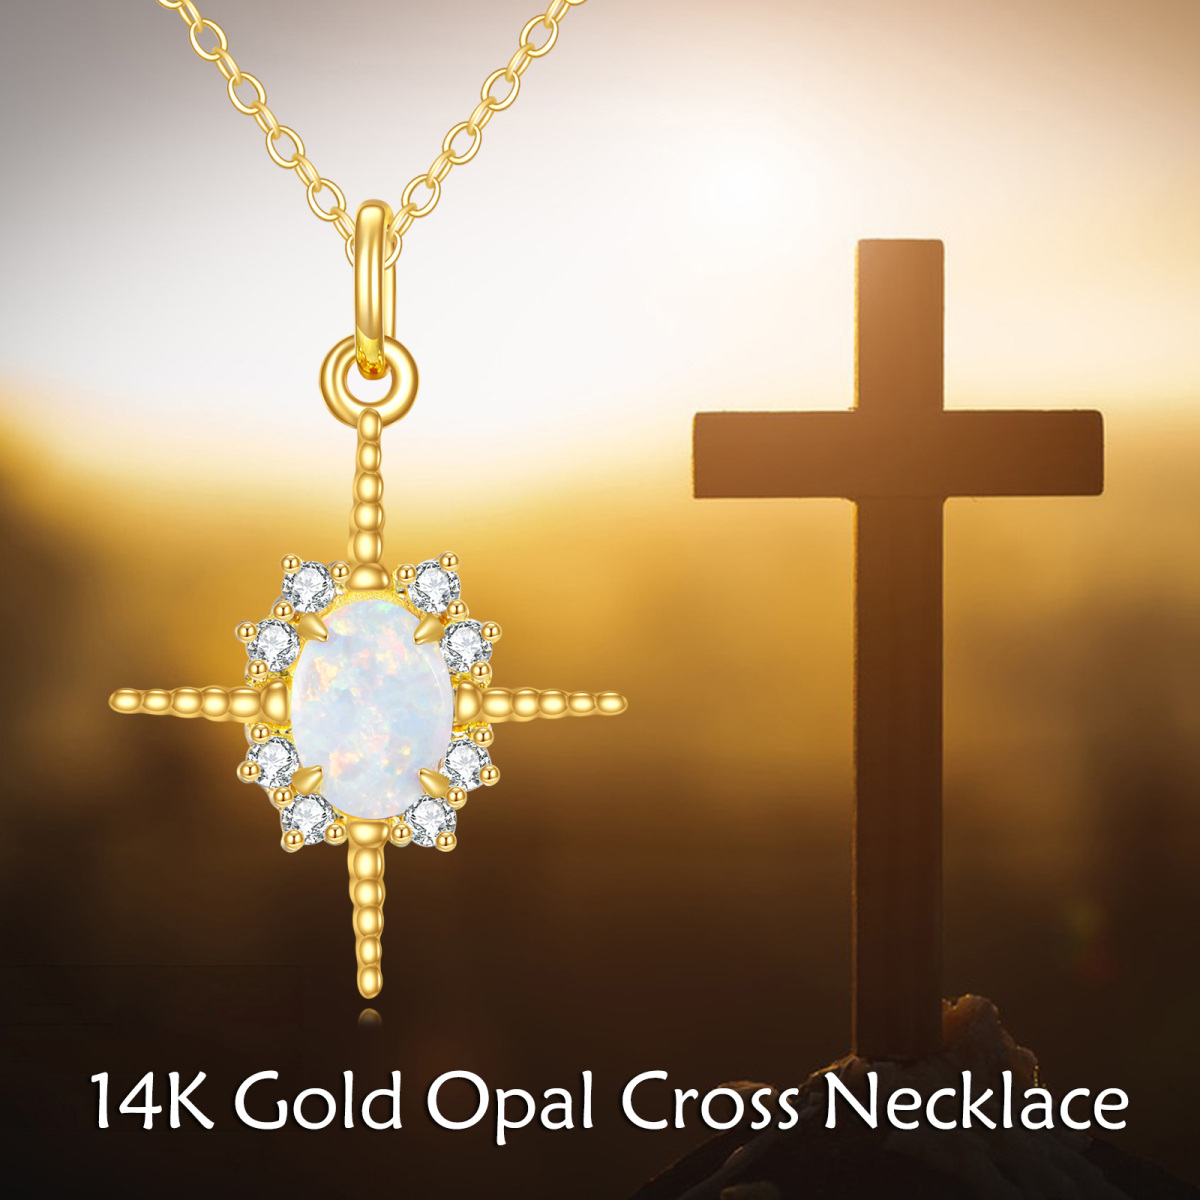 14K Gold Oval Shaped Opal Cross Pendant Necklace-6